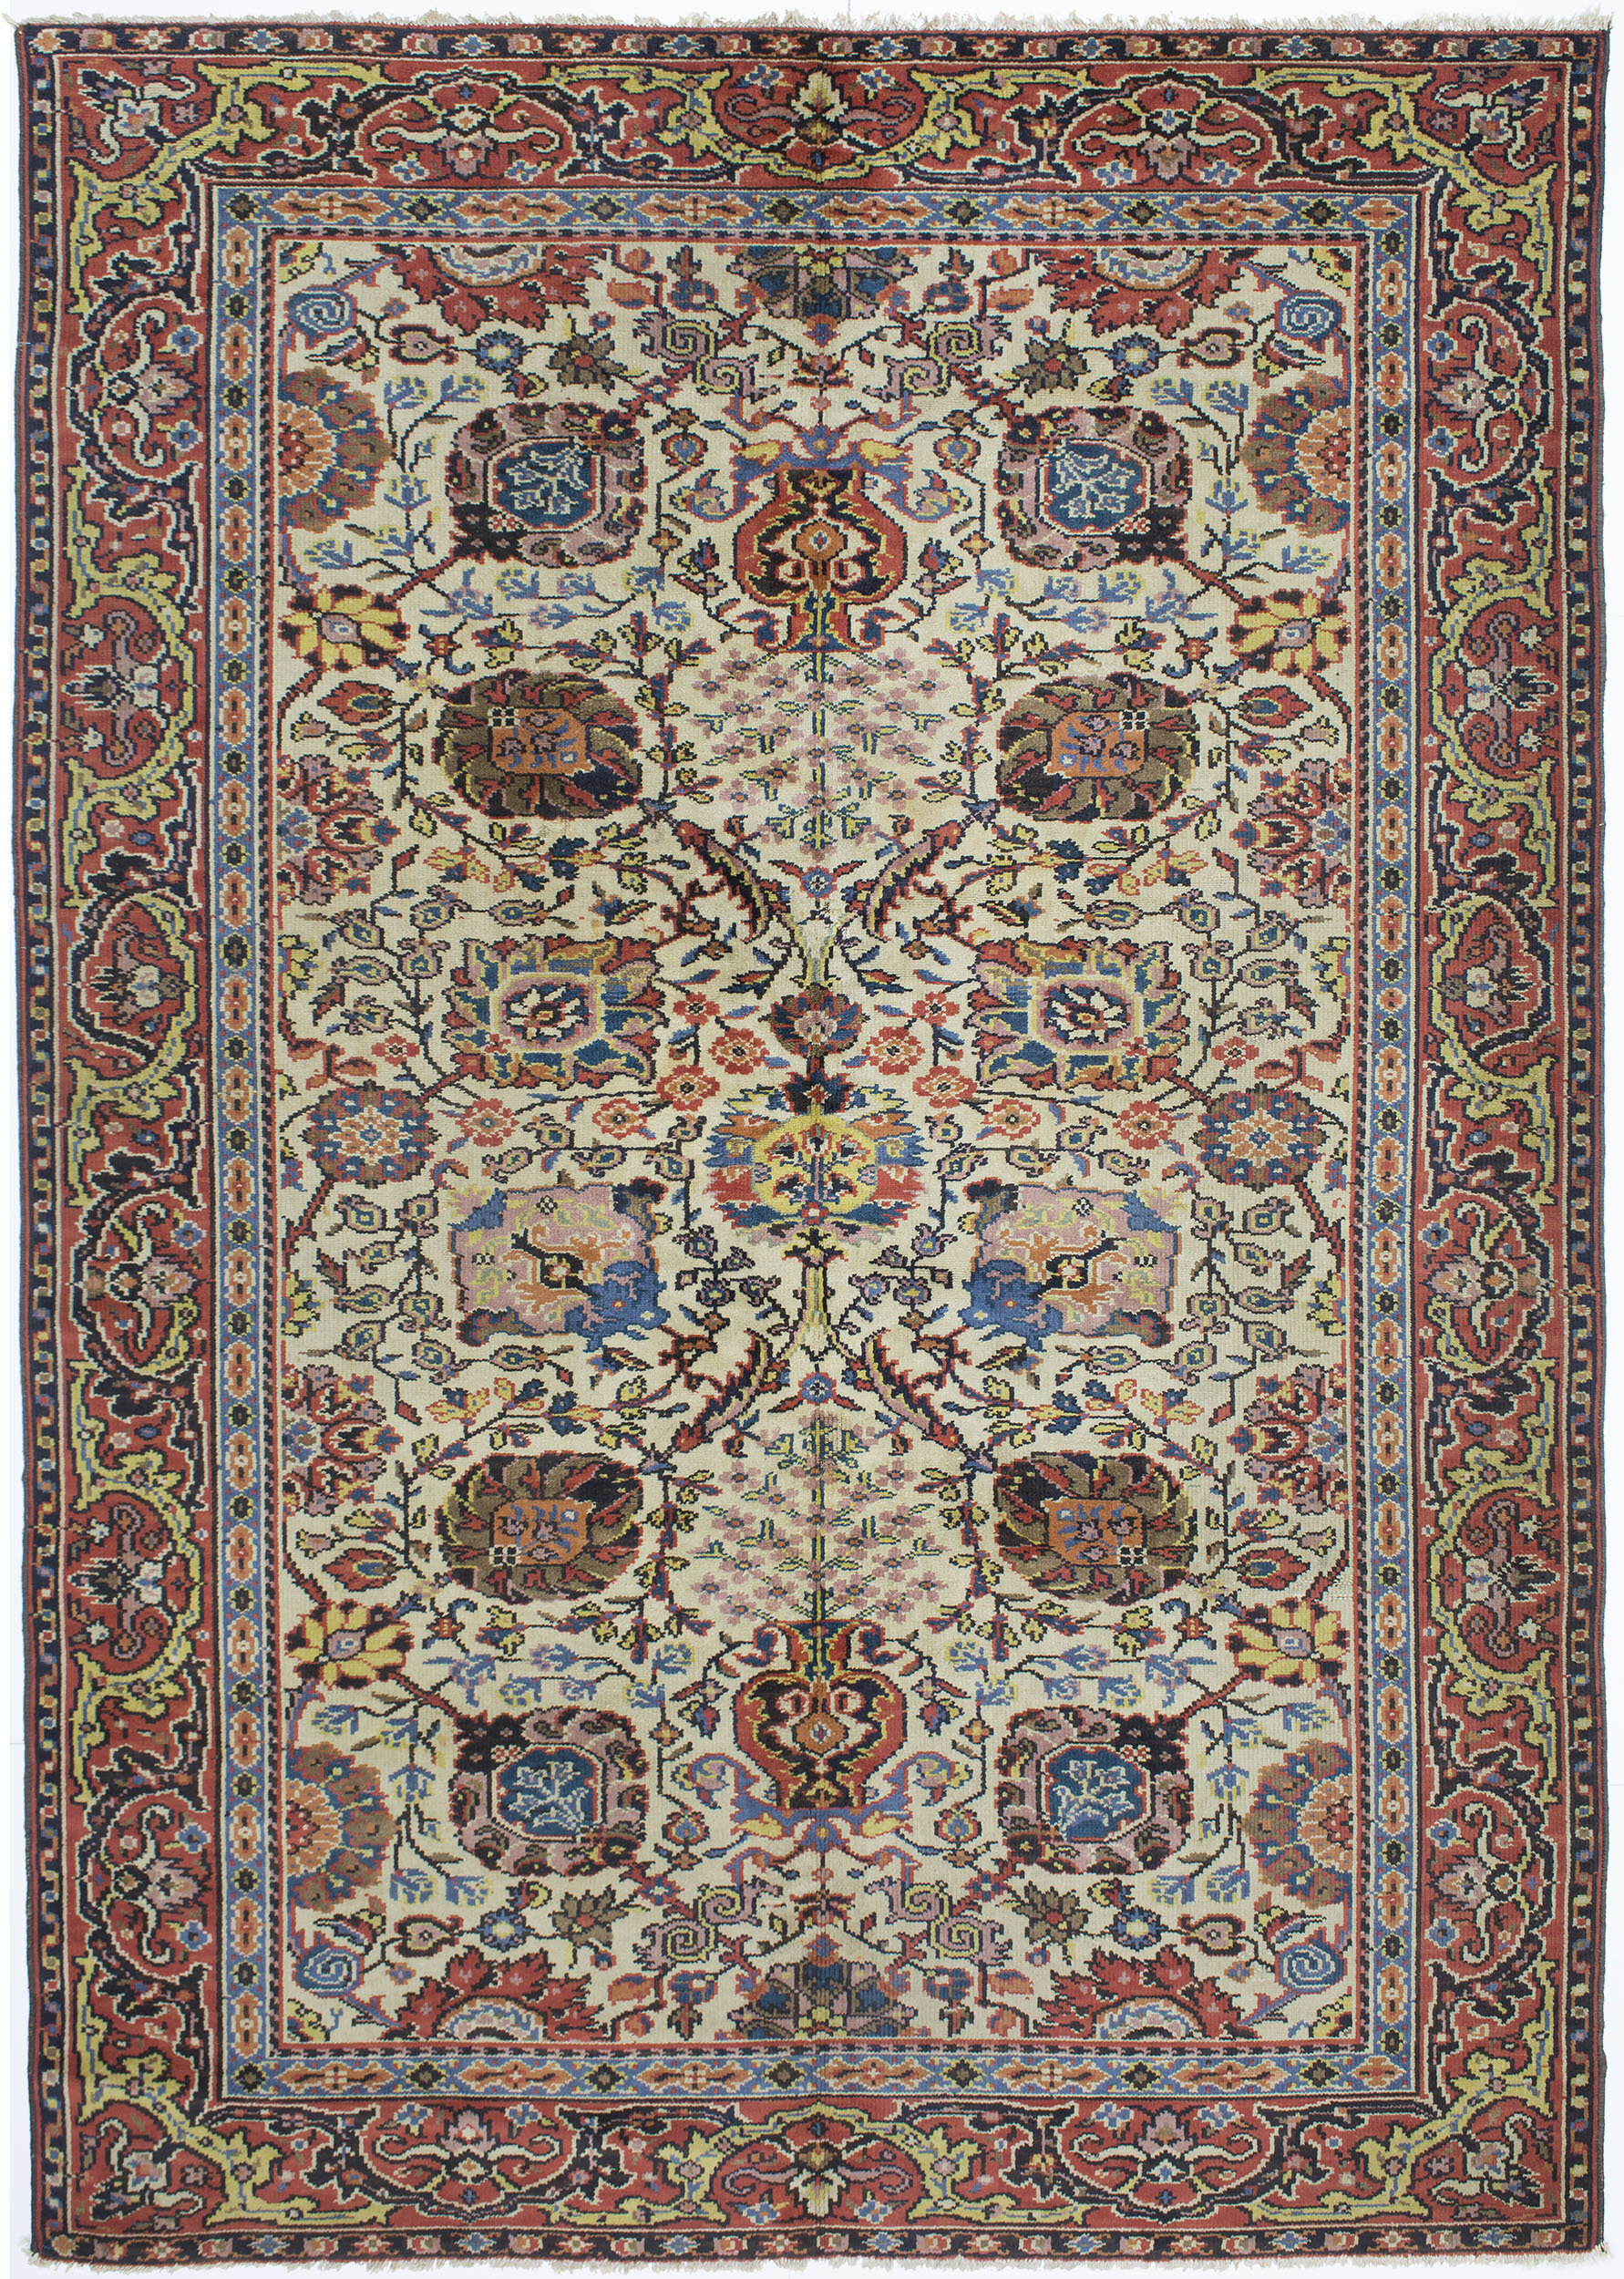 European Carpet 9' 5" x 6' 7"